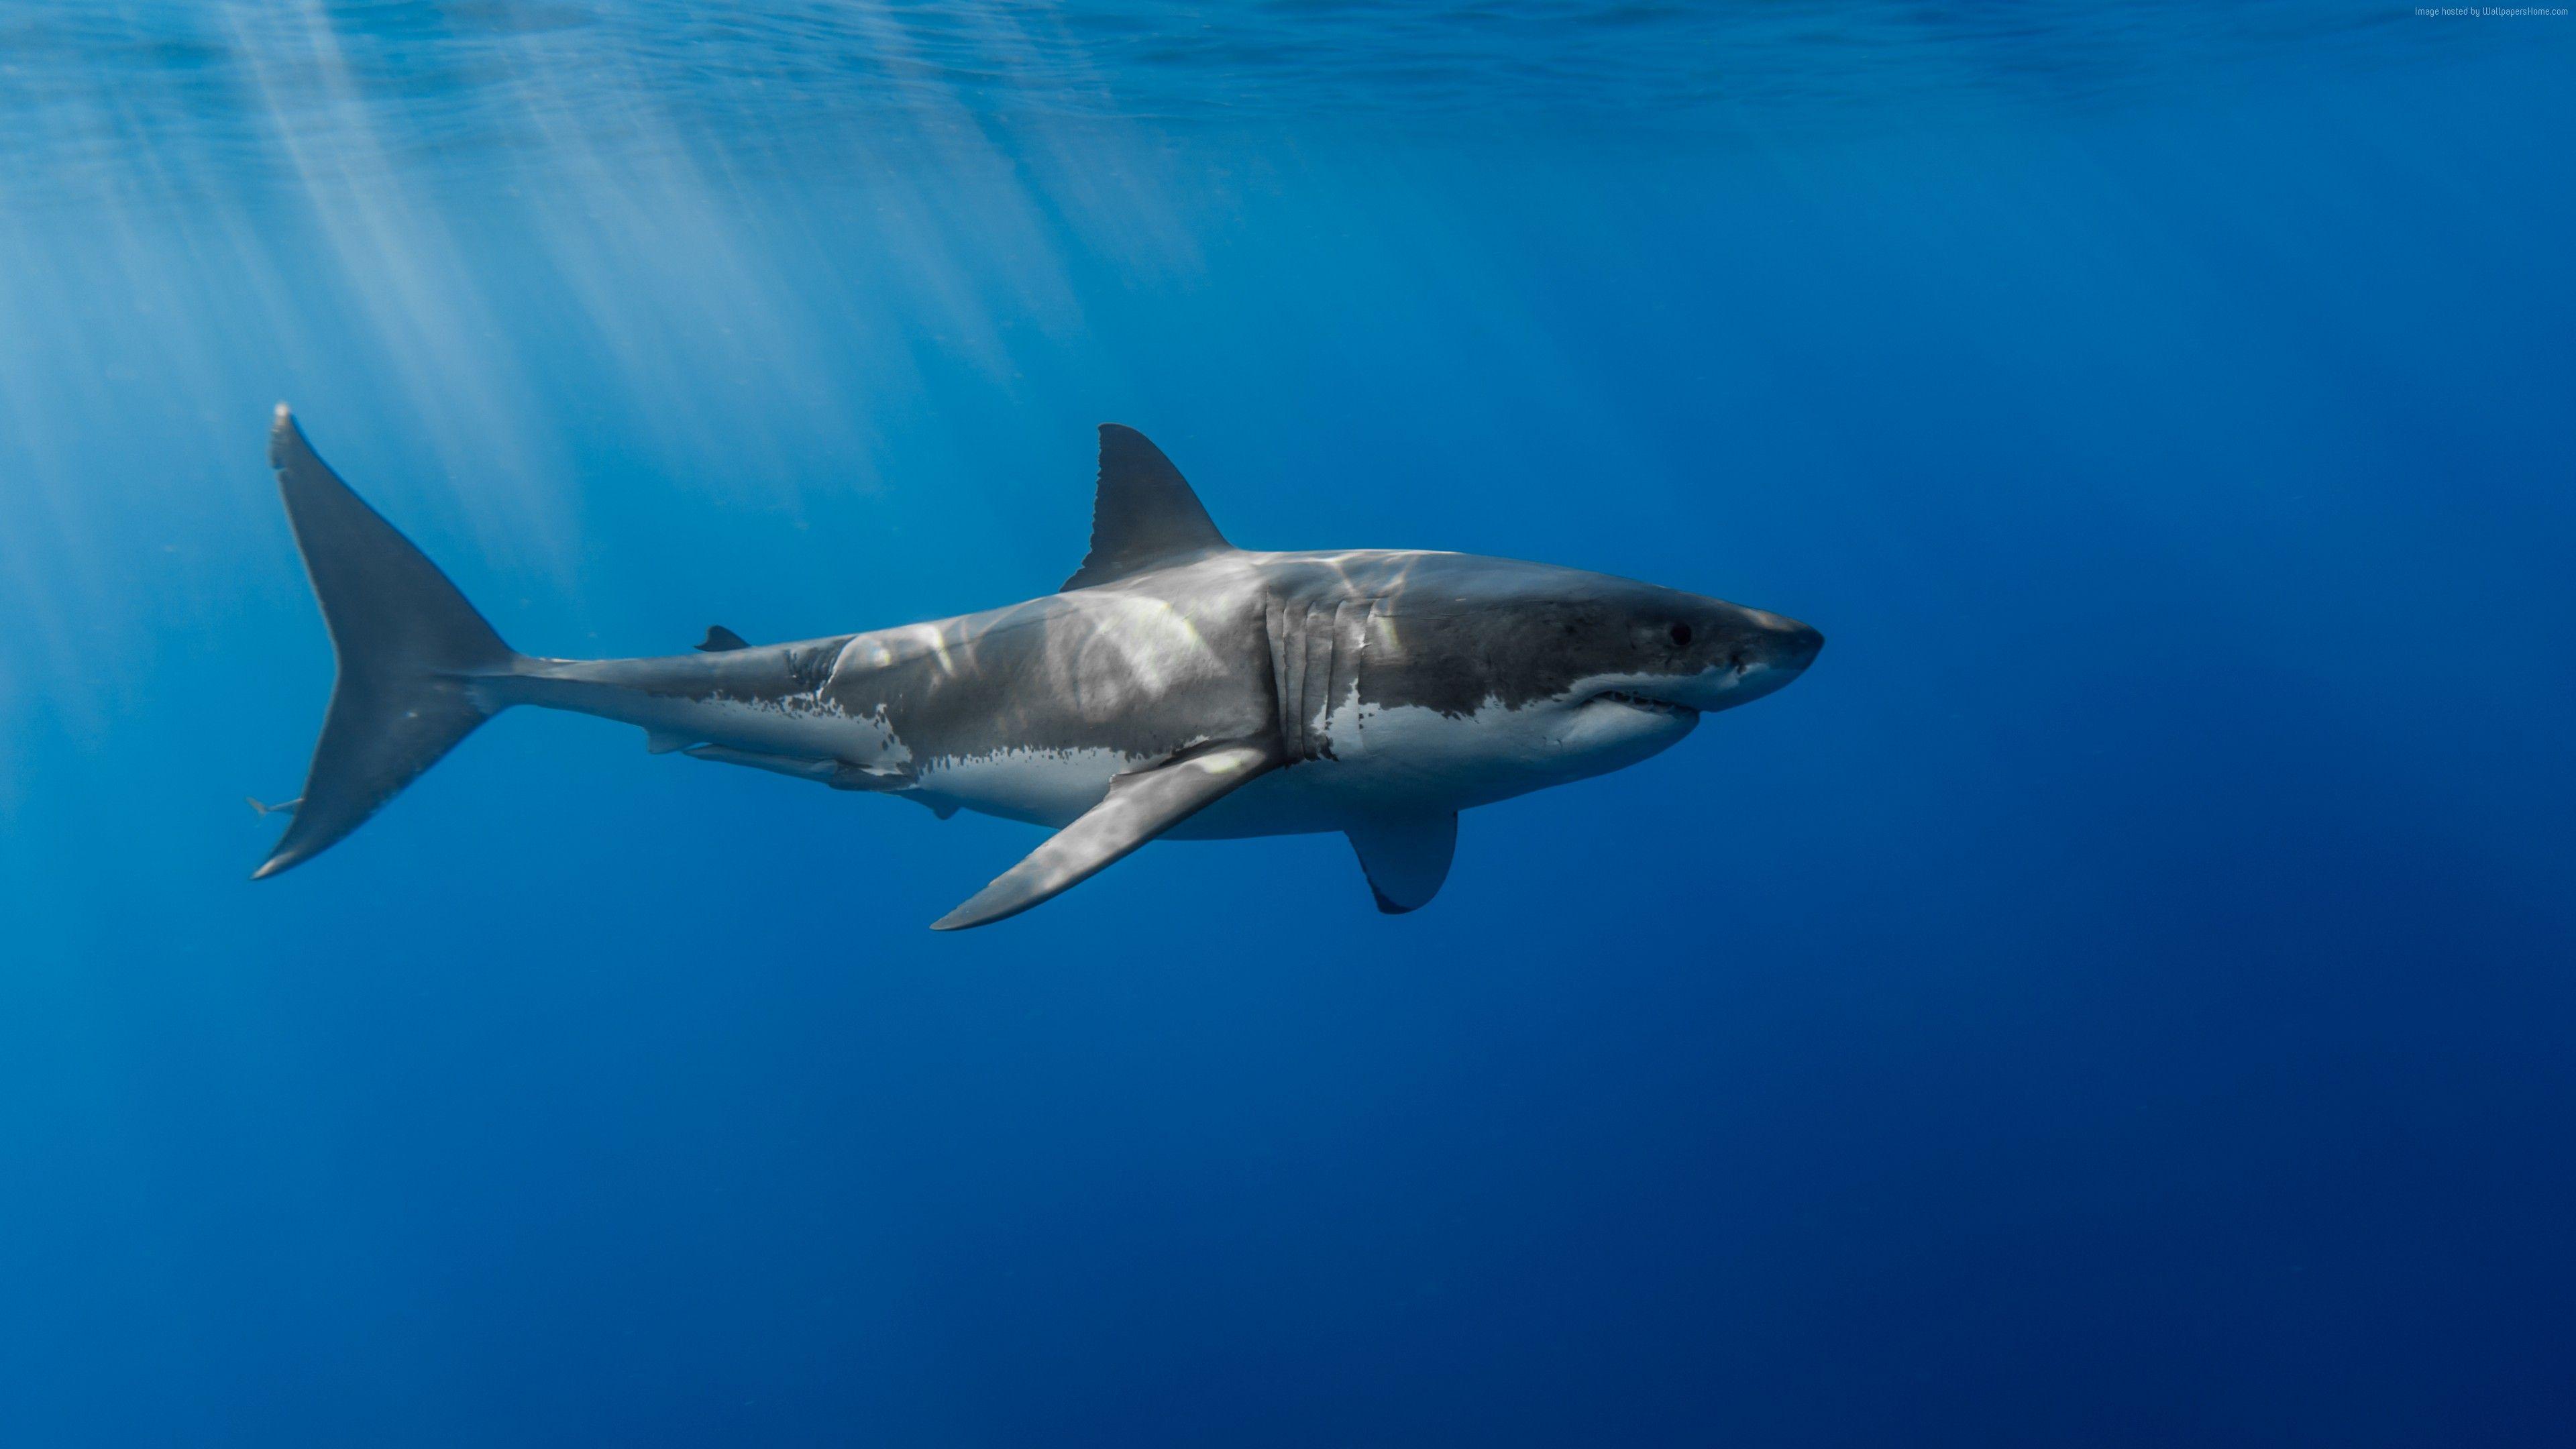 Desktop Wallpaper Shark Predator Underwater Hd Image Picture  Background A3tlpl